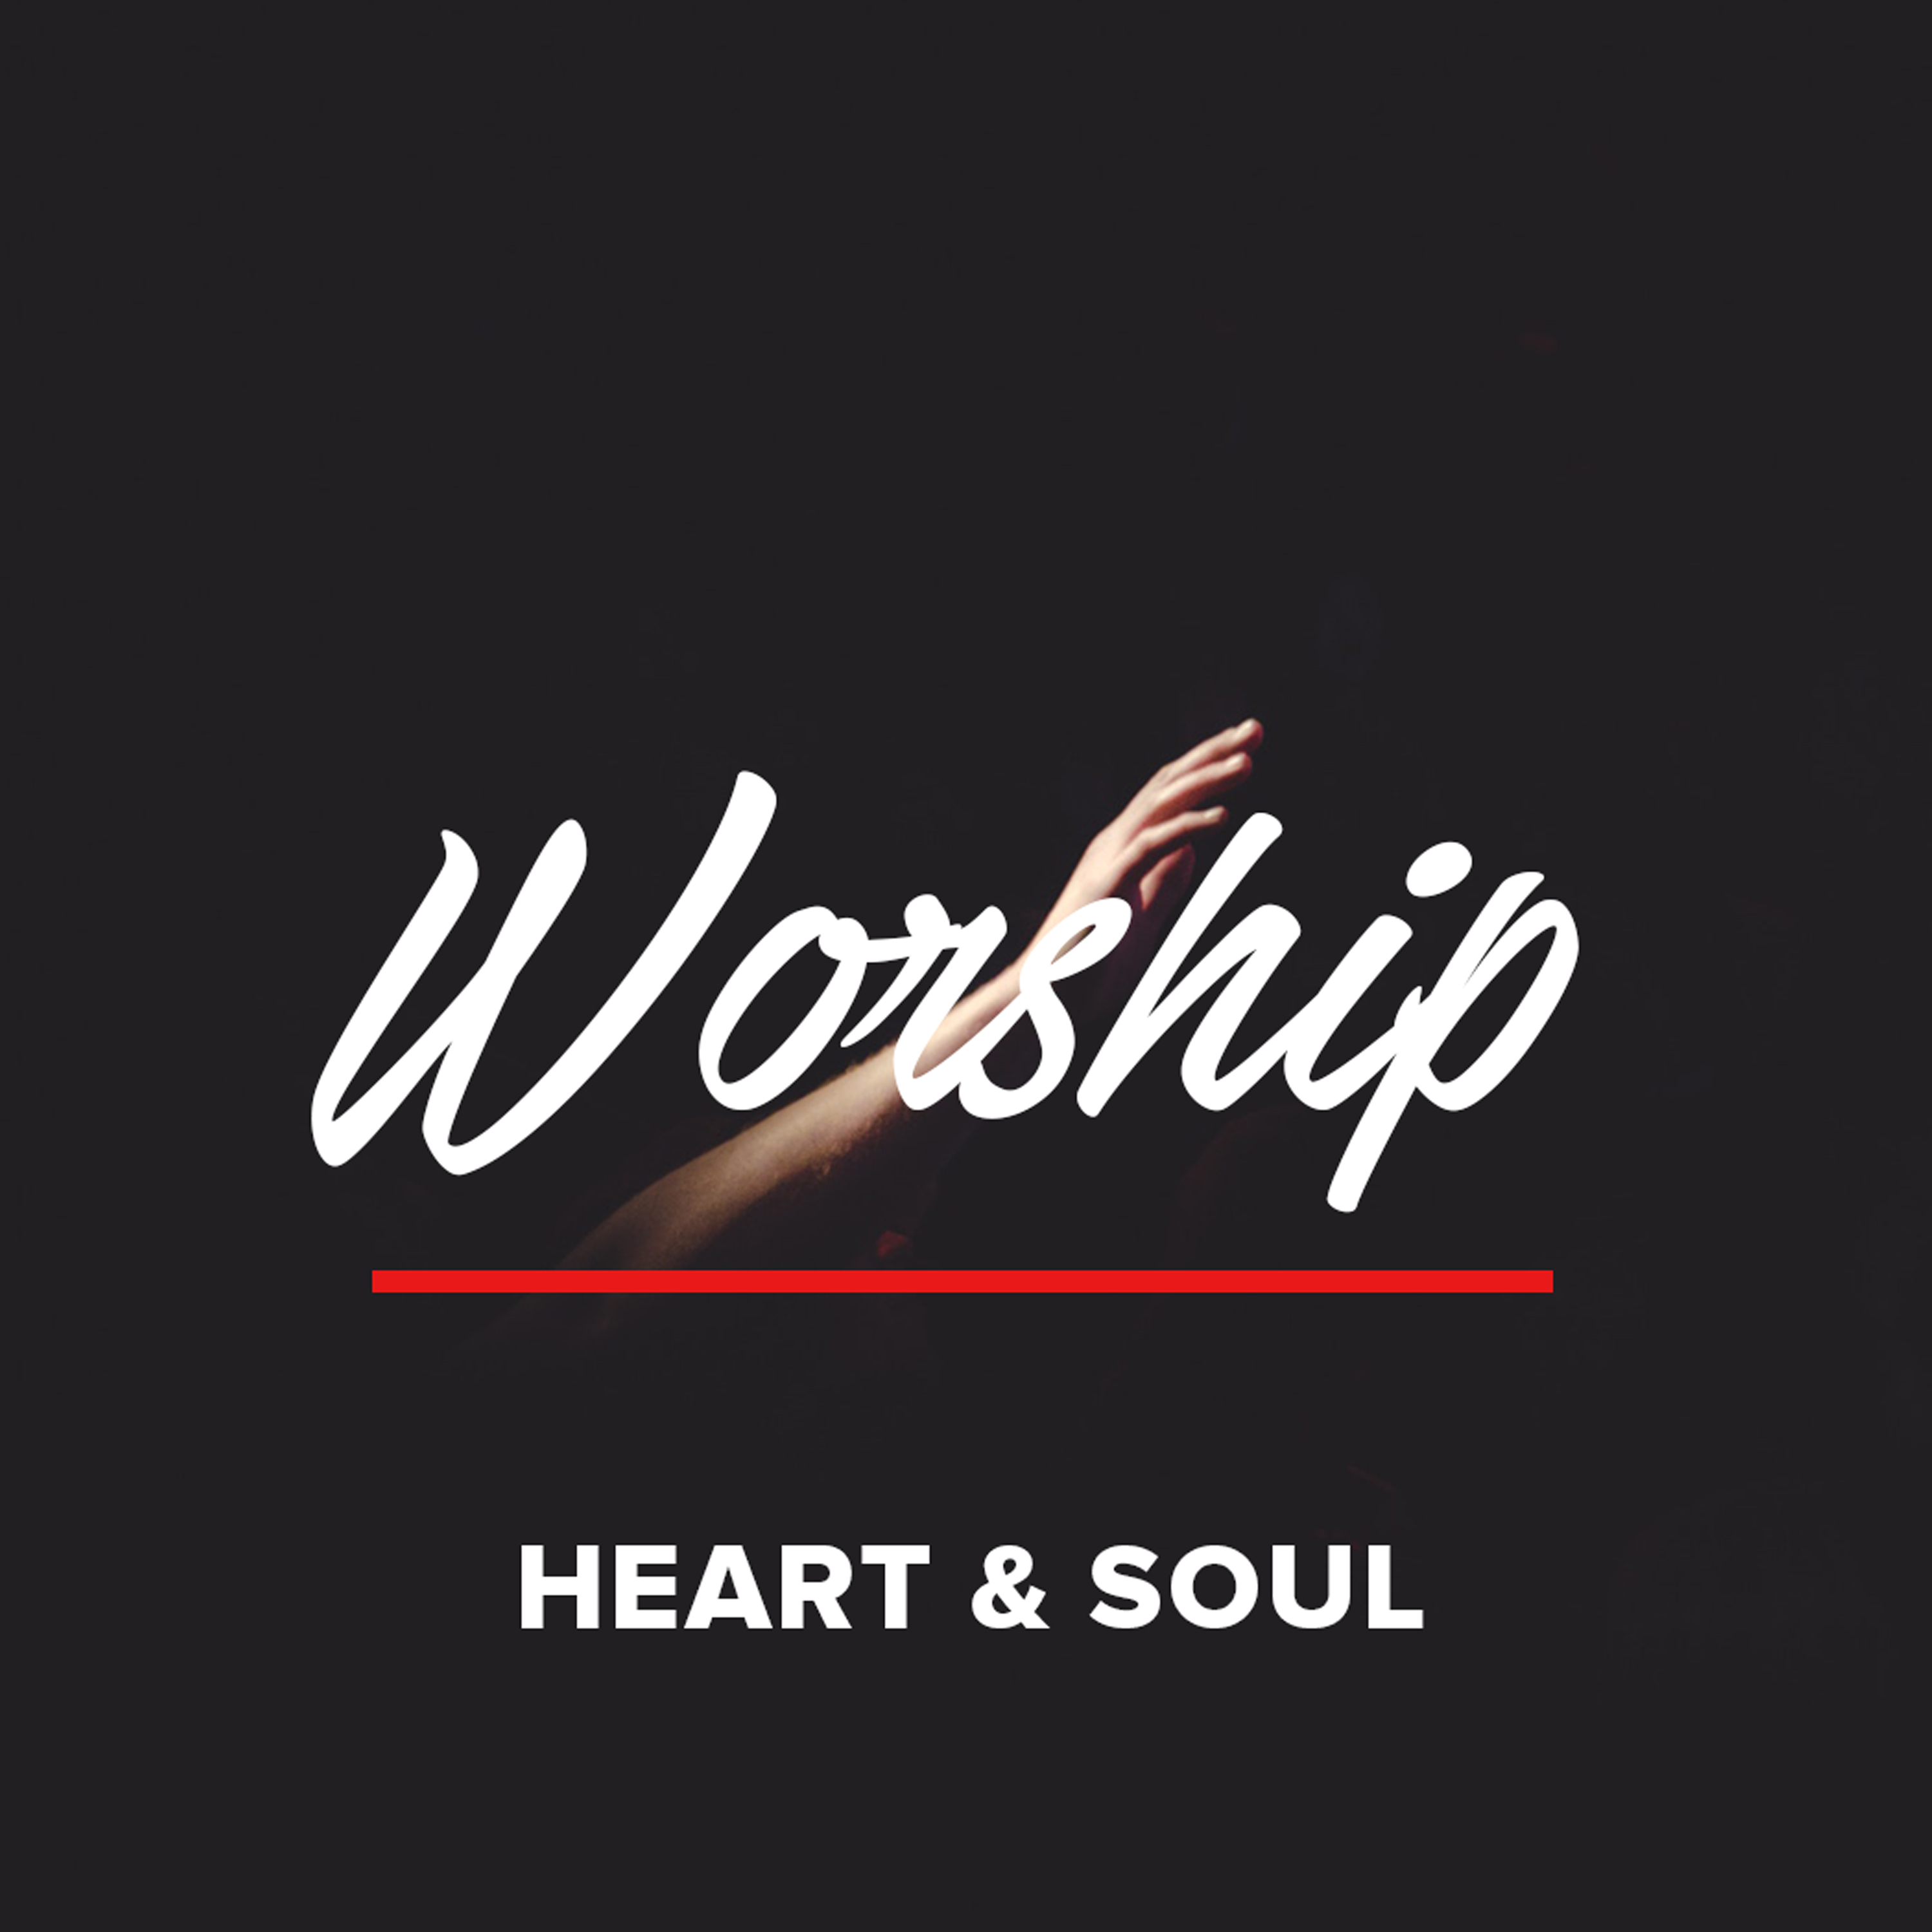 Panel - Heart & Soul | Worship